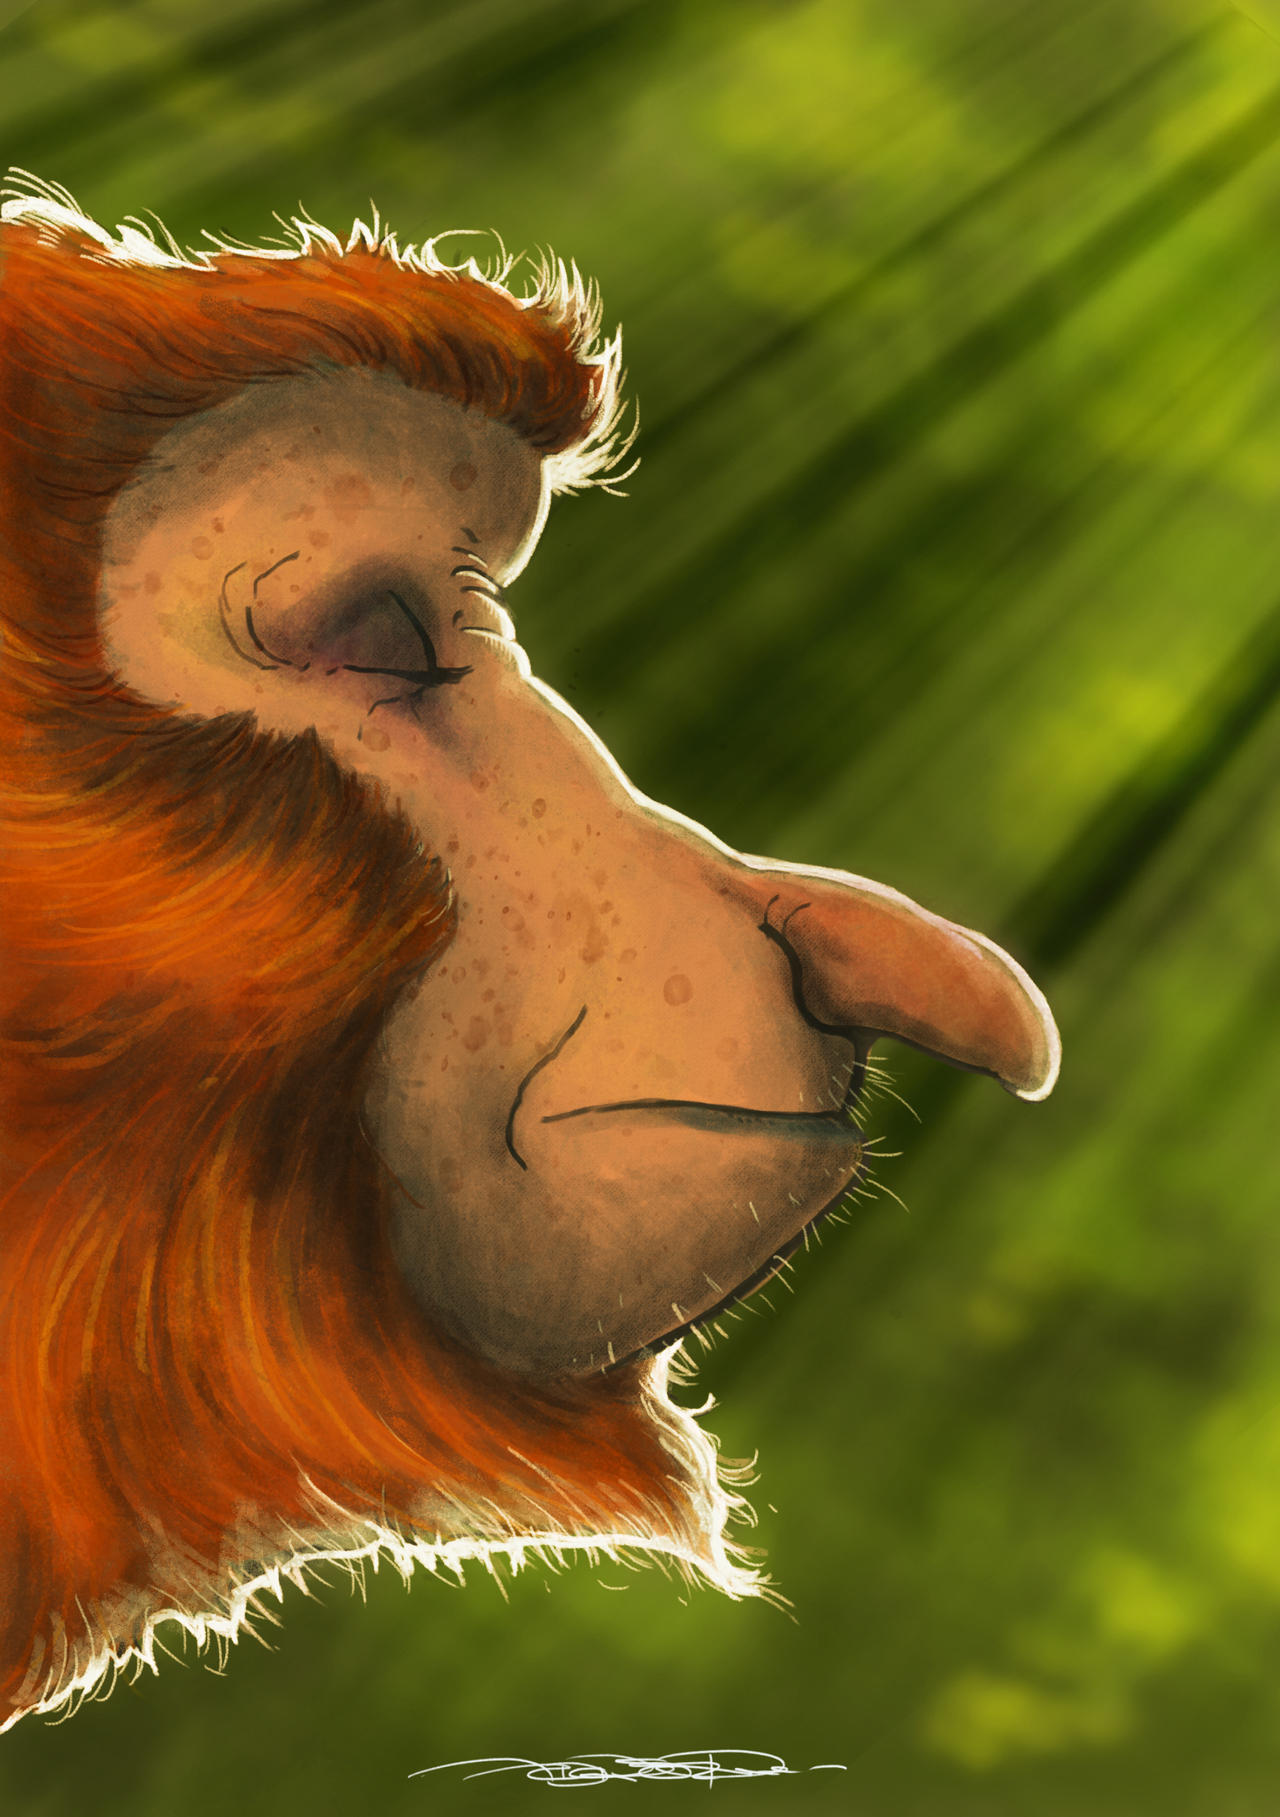 File:Macaco-narigudo.jpg - Wikimedia Commons